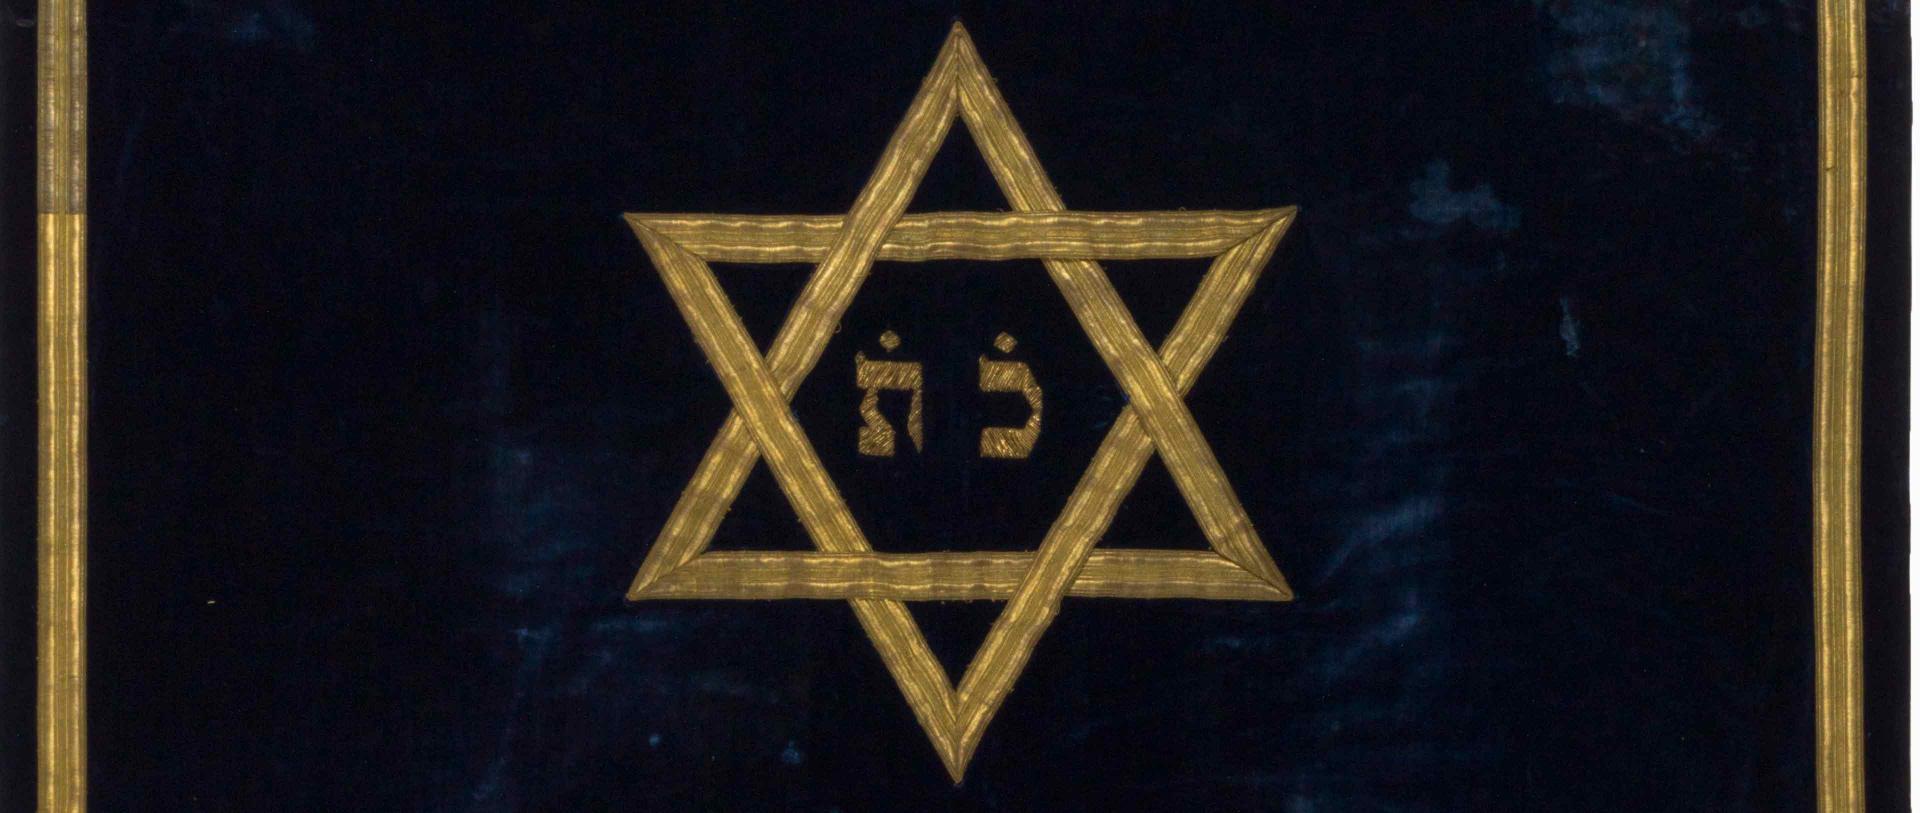 Golden Magen David on dark background, detail from a Torah curtain.